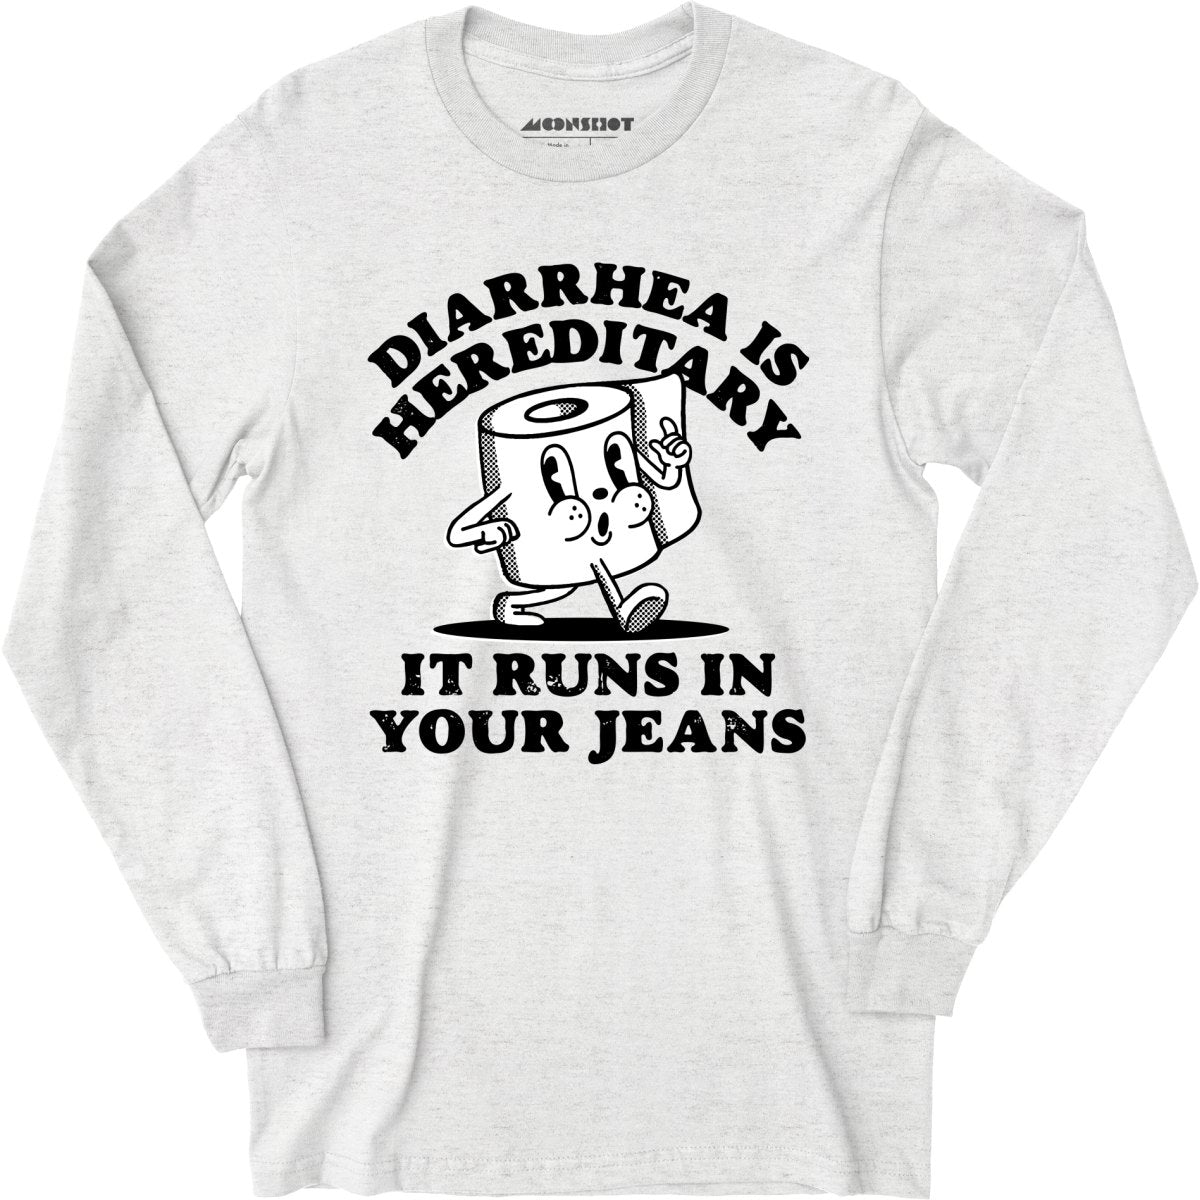 Diarrhea is Hereditary - Long Sleeve T-Shirt